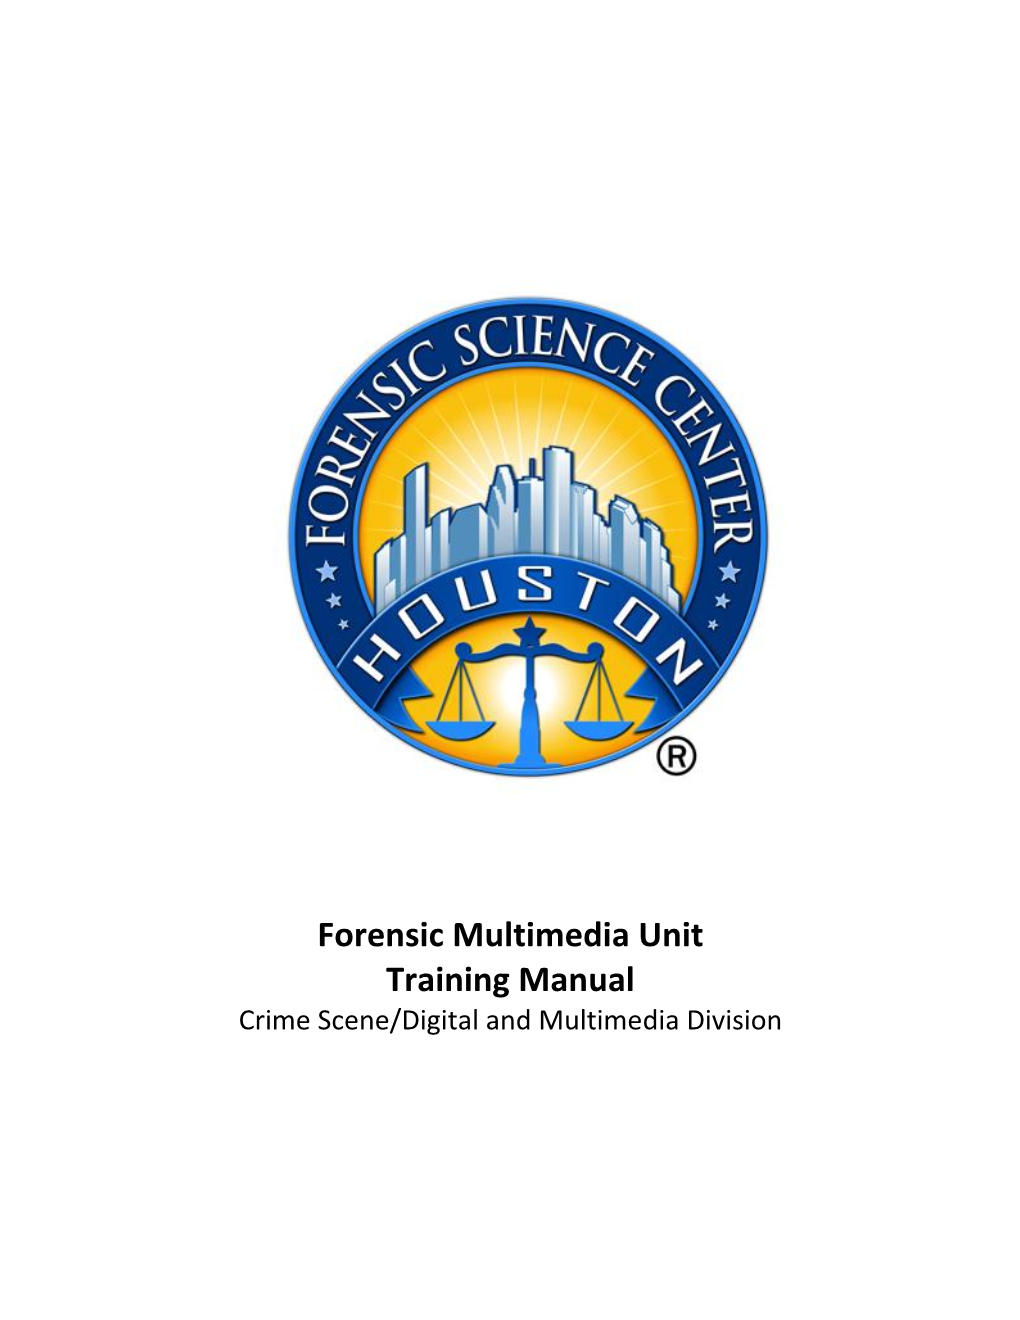 Forensic Multimedia Unit Training Manual Crime Scene/Digital and Multimedia Division